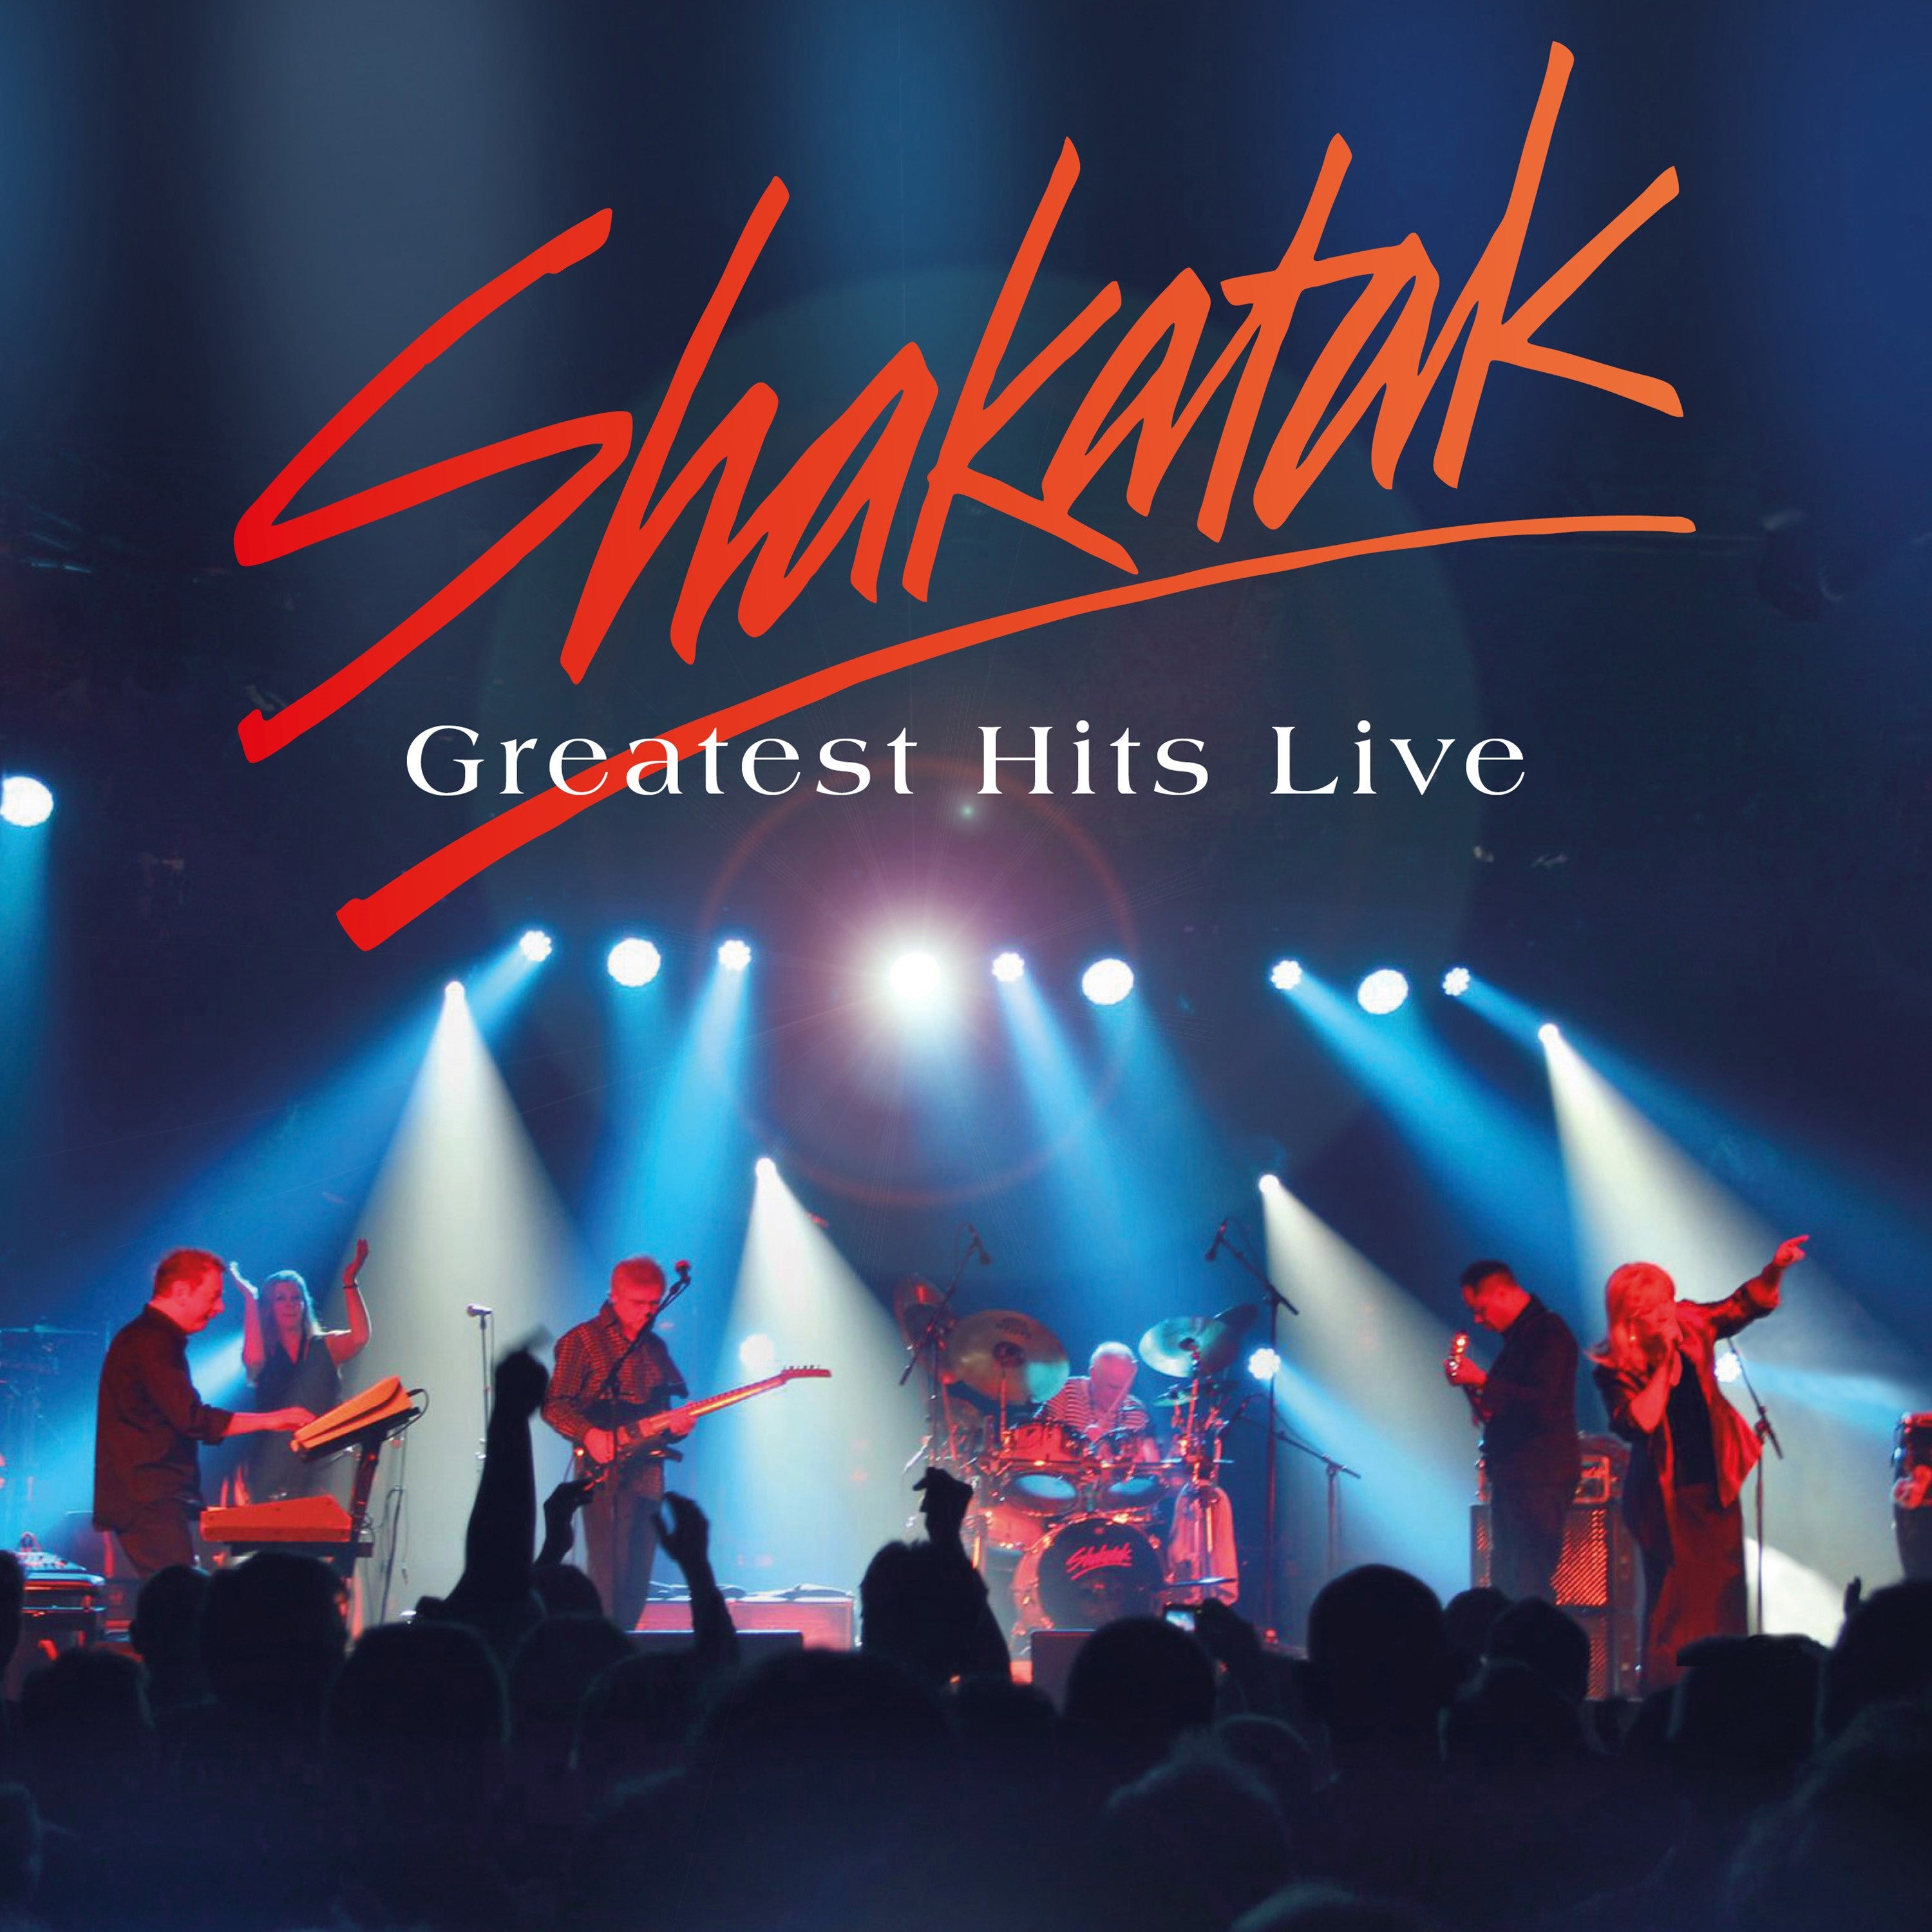 Shakatak - Greatest Hits Live - 2CD & Bonus  DVD - Secret Records Limited